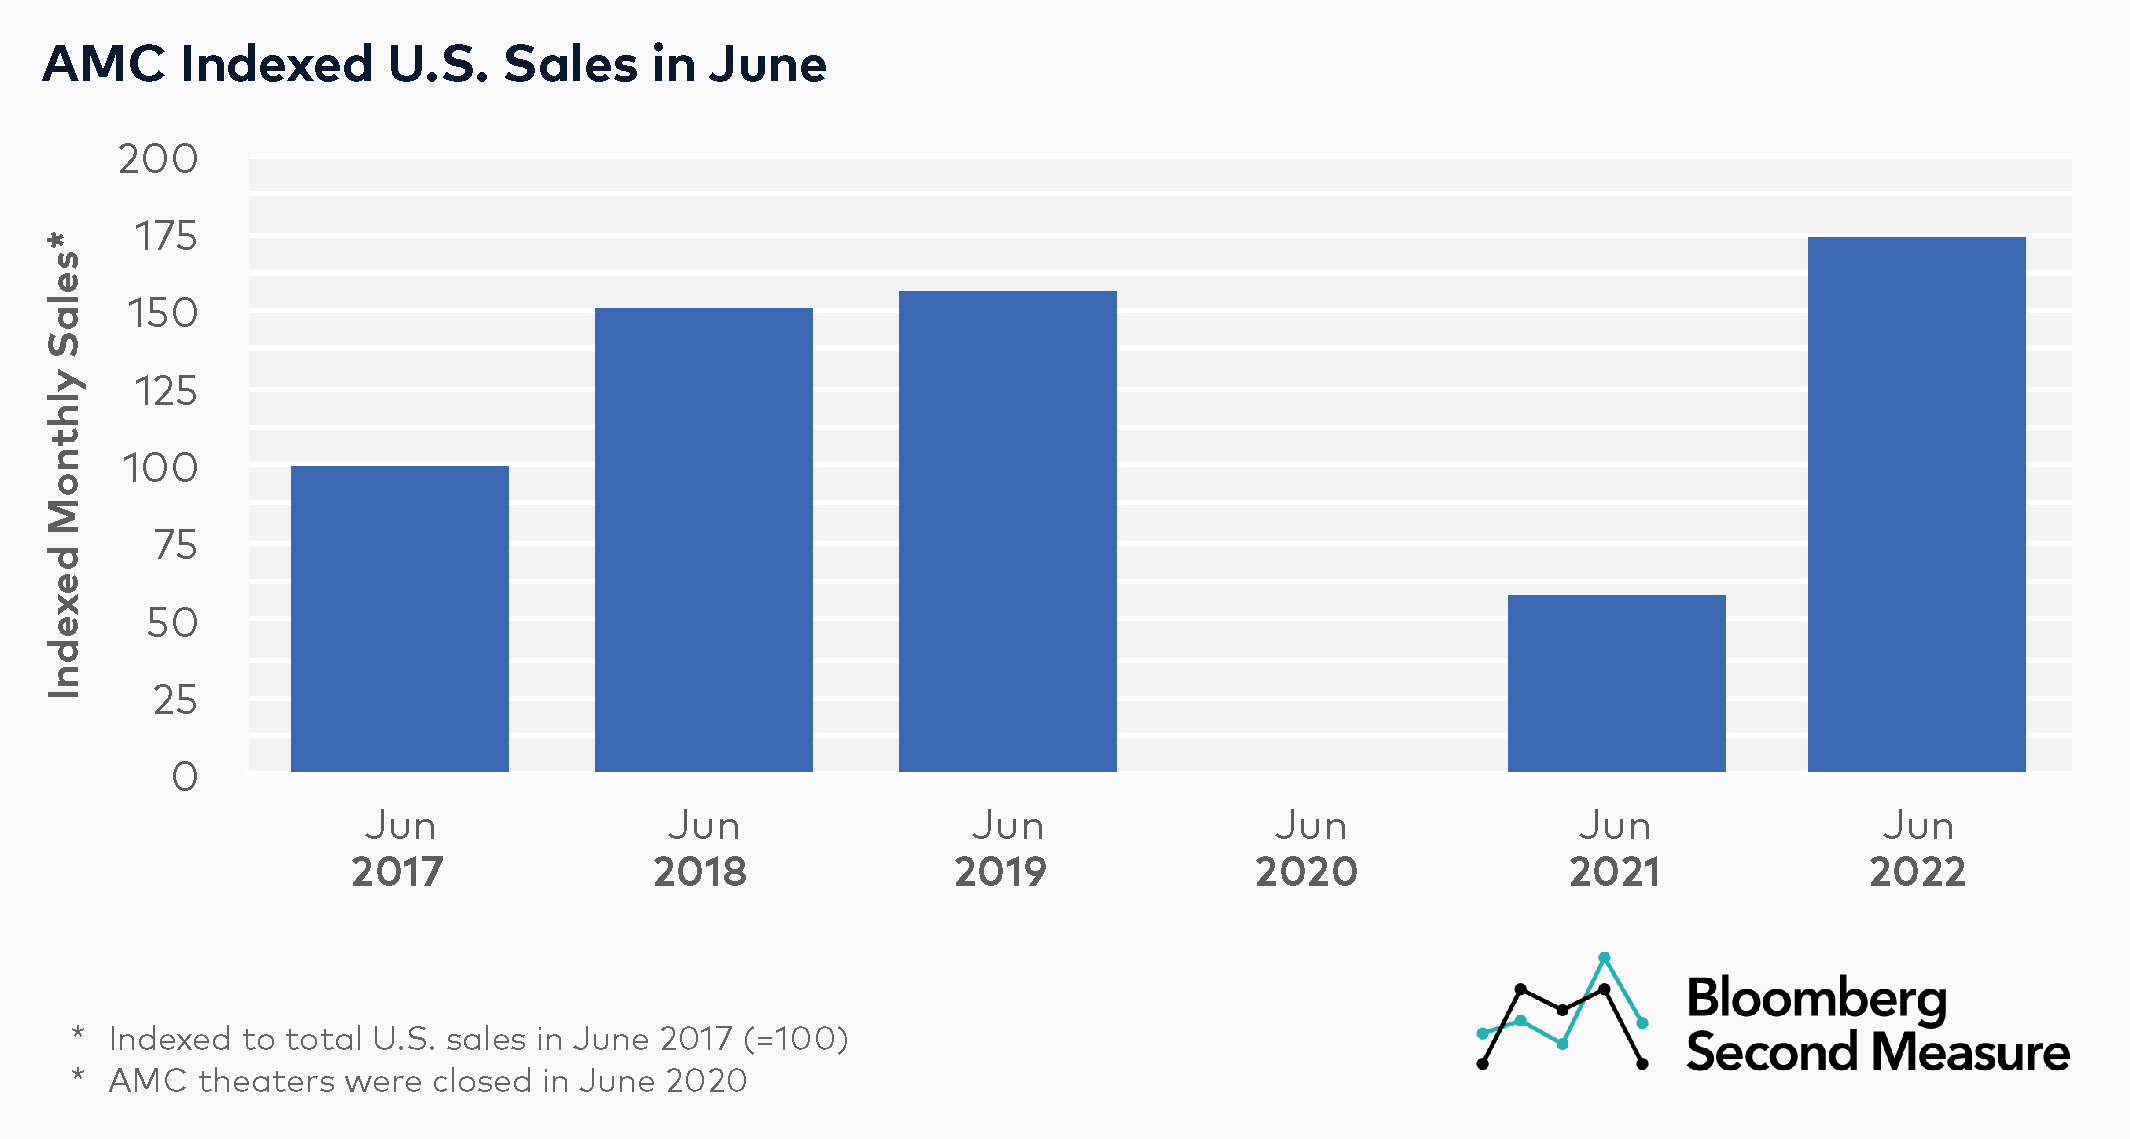 AMC sales in June surpassed pre-pandemic levels